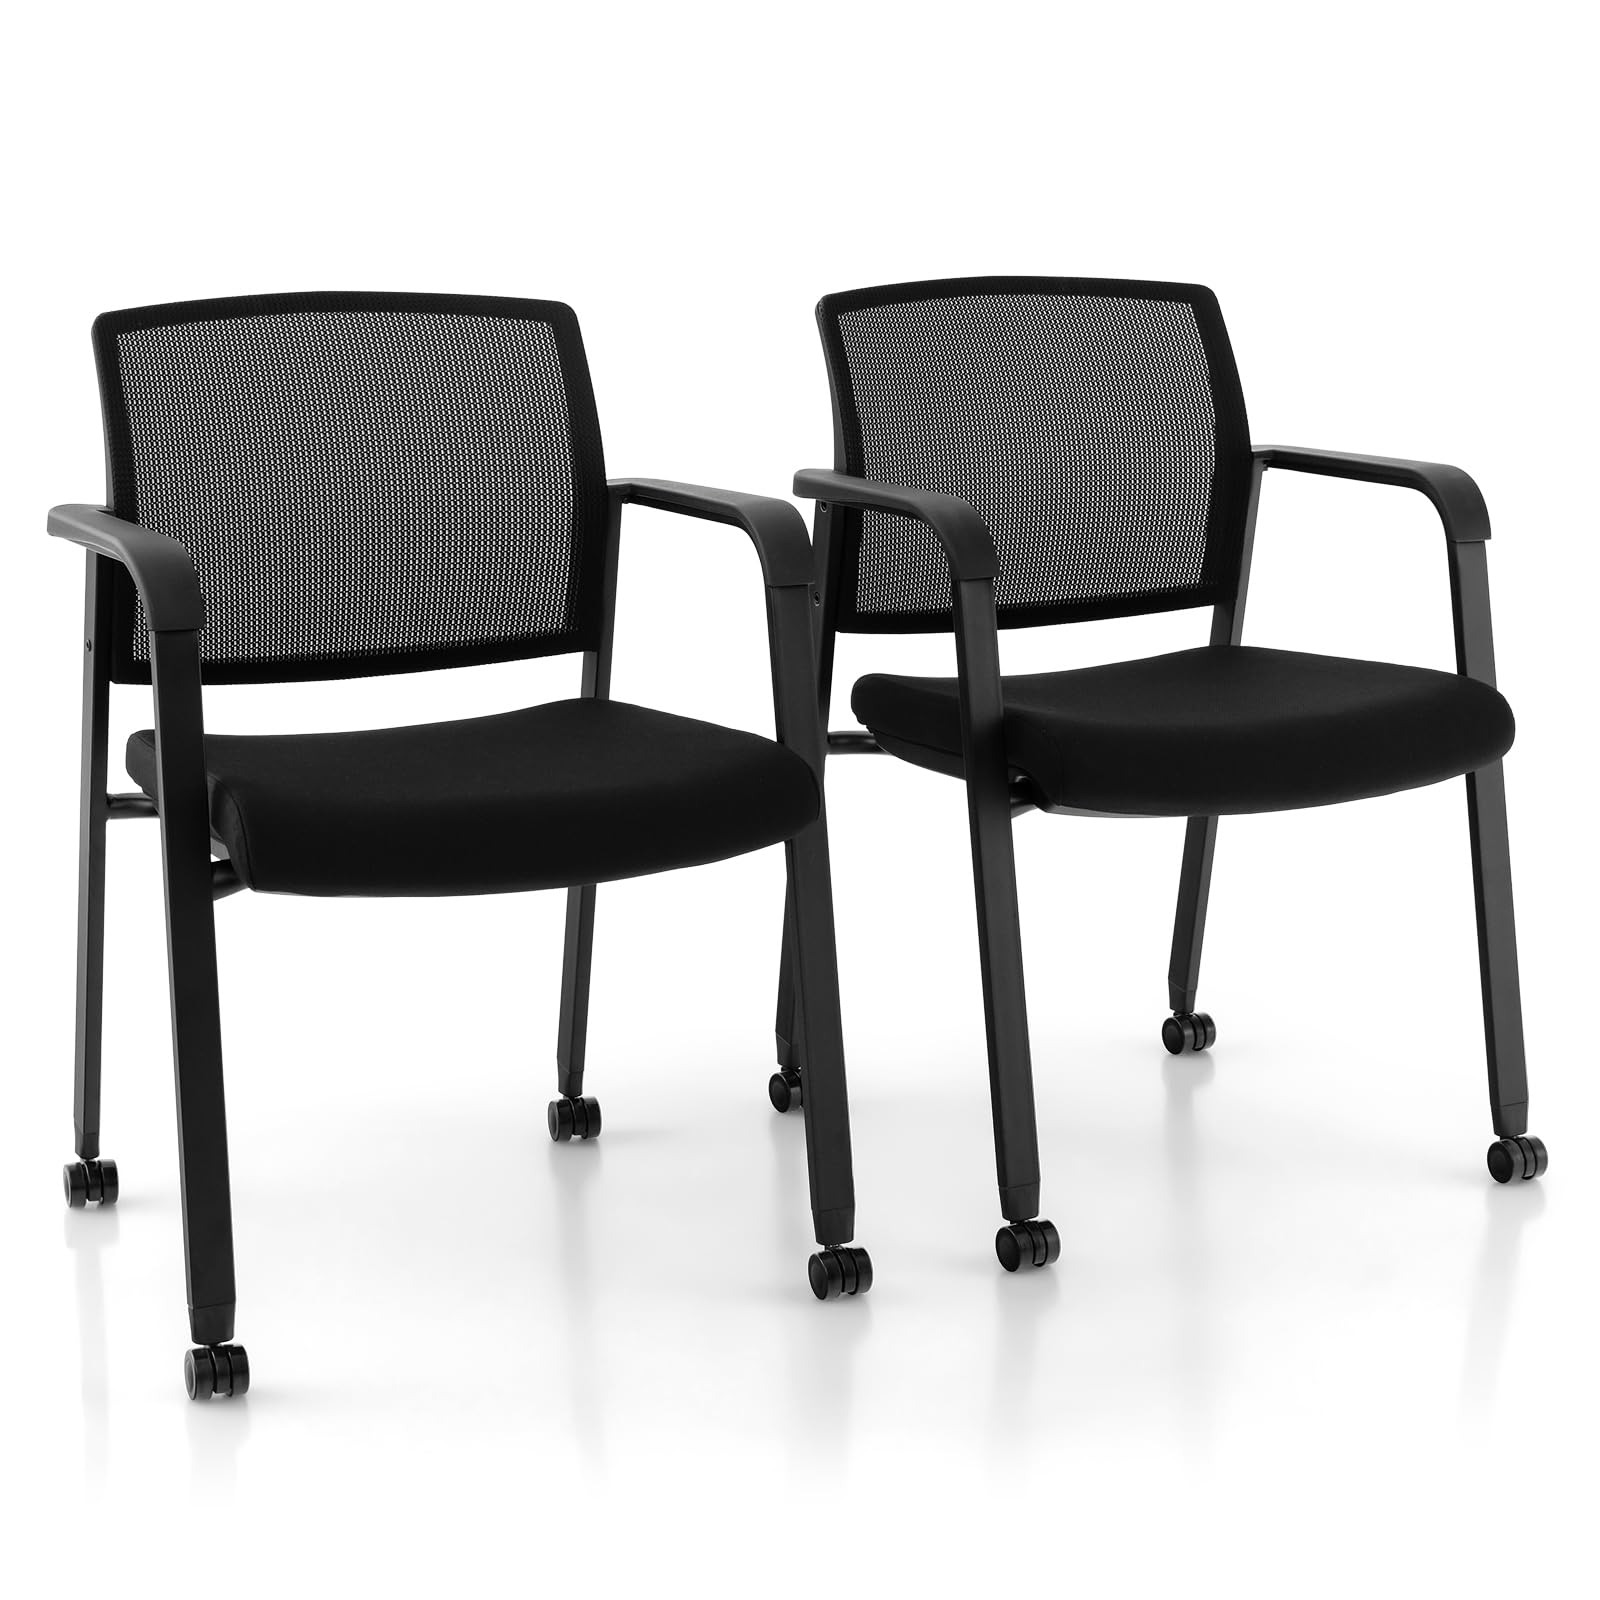 Giantex Waiting Room Chair Set